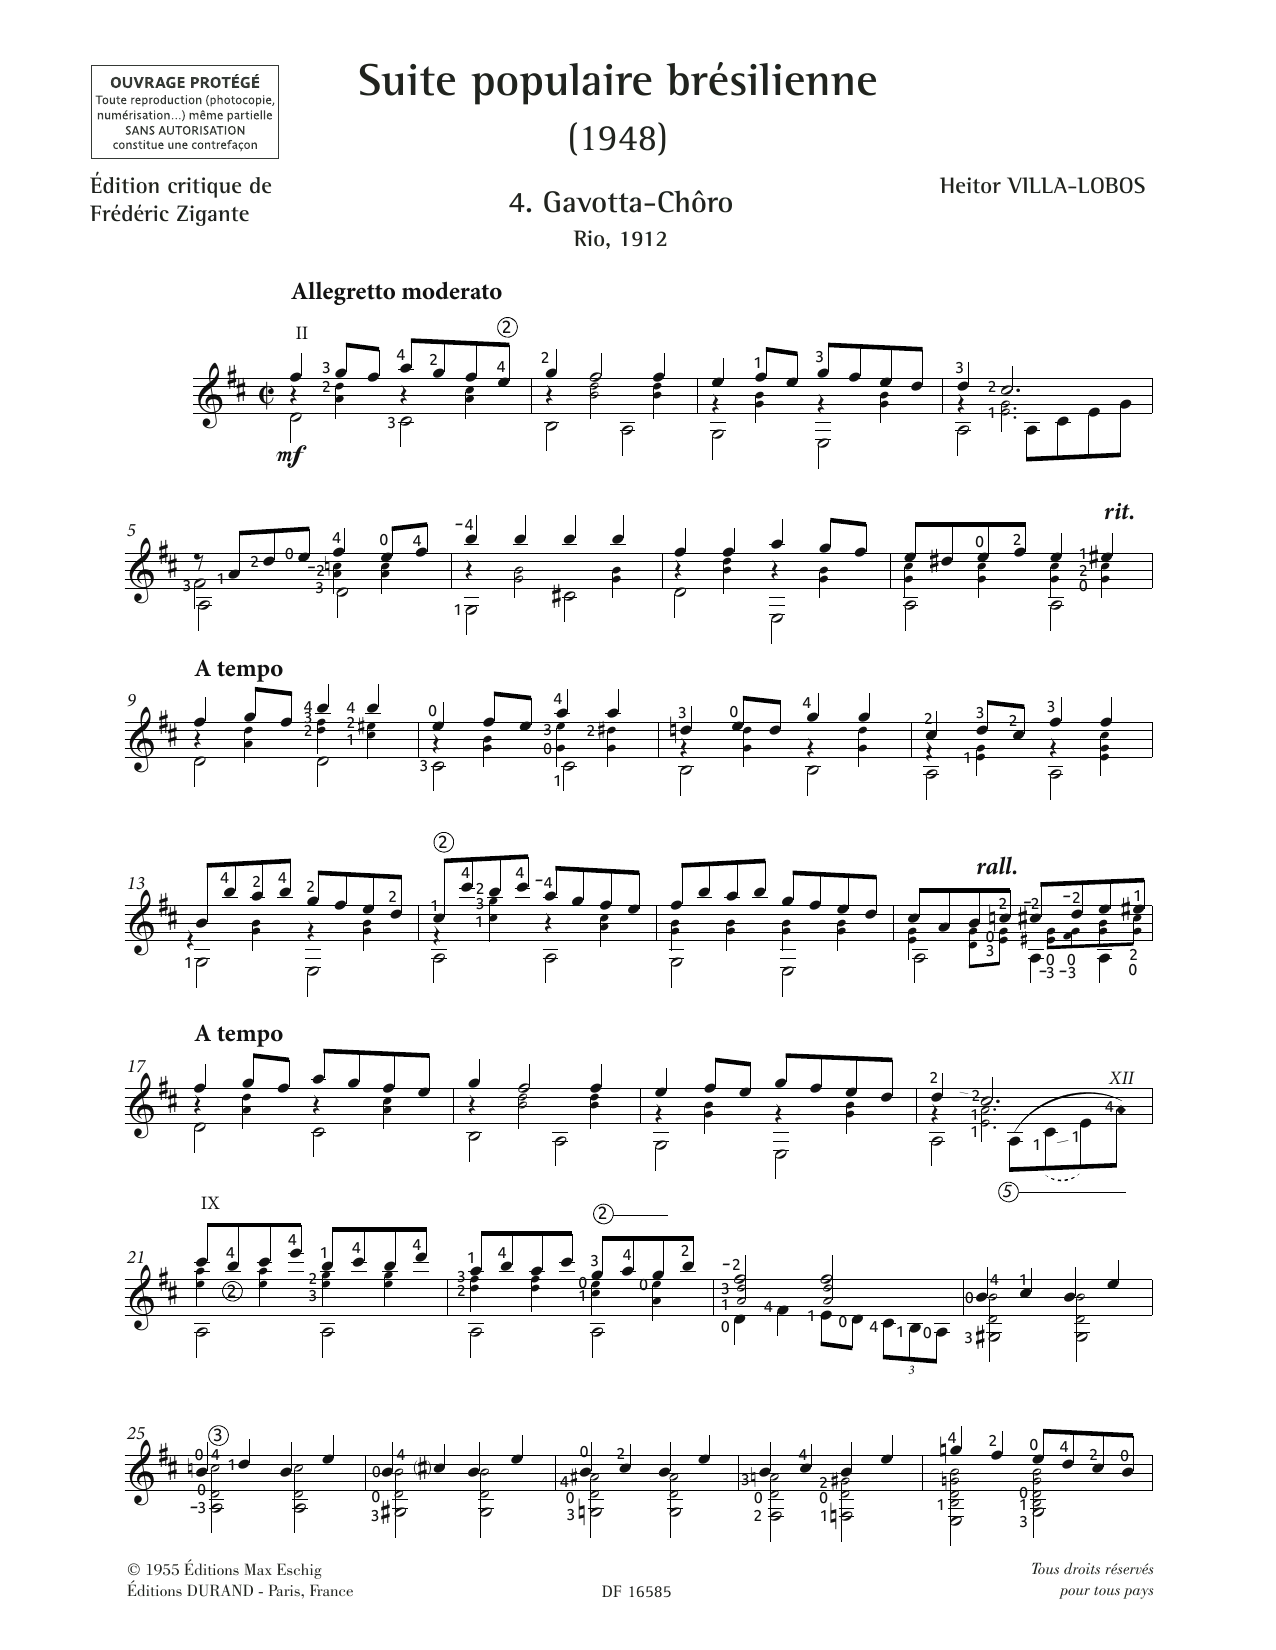 Heitor Villa-Lobos Gavotta-Choro Sheet Music Notes & Chords for Solo Guitar - Download or Print PDF